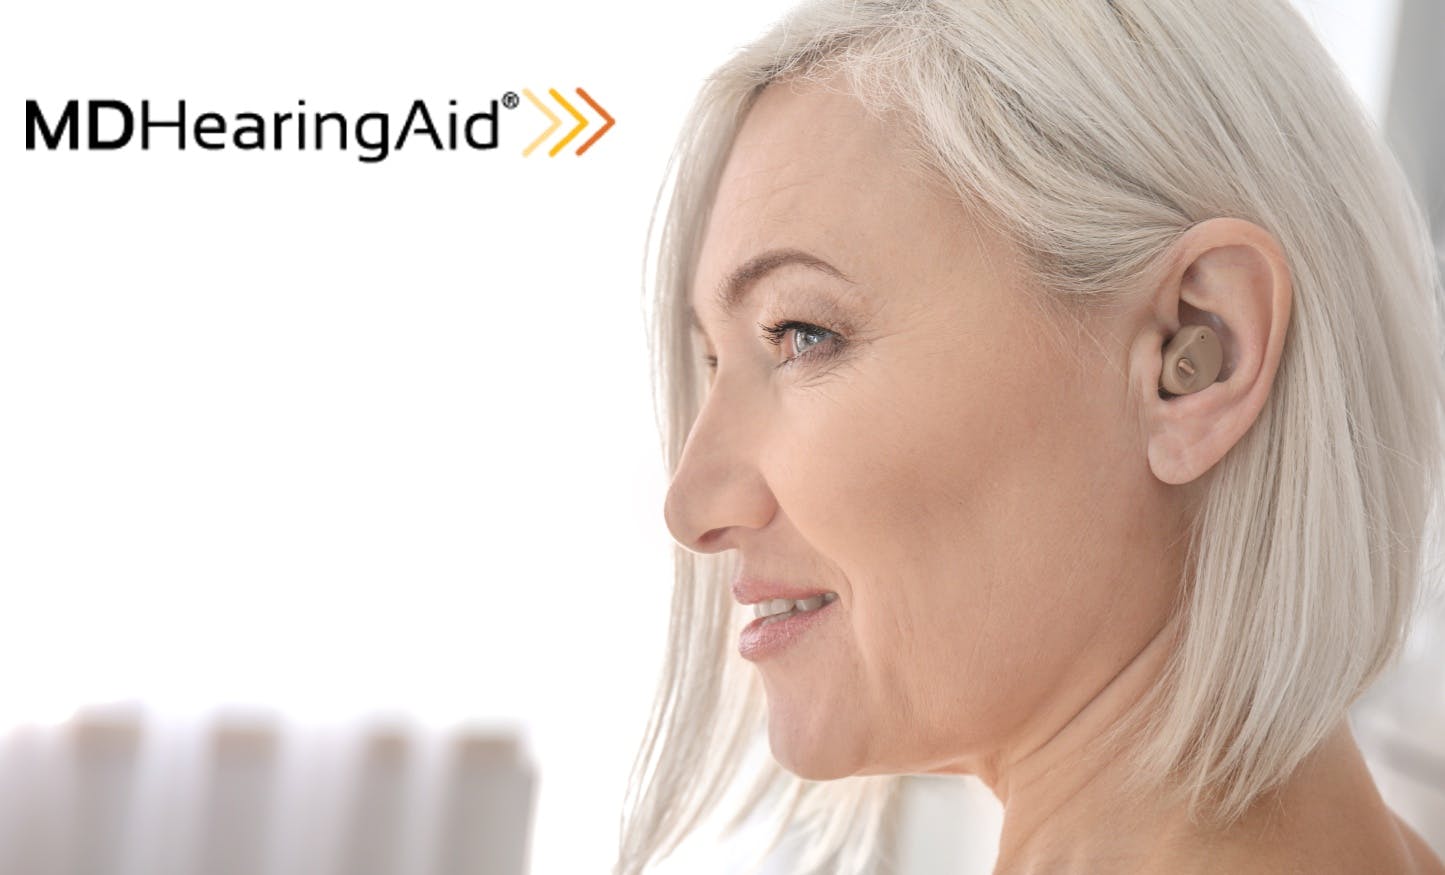 MDHearingAid: The Medical-Grade Hearing Aids You Deserve